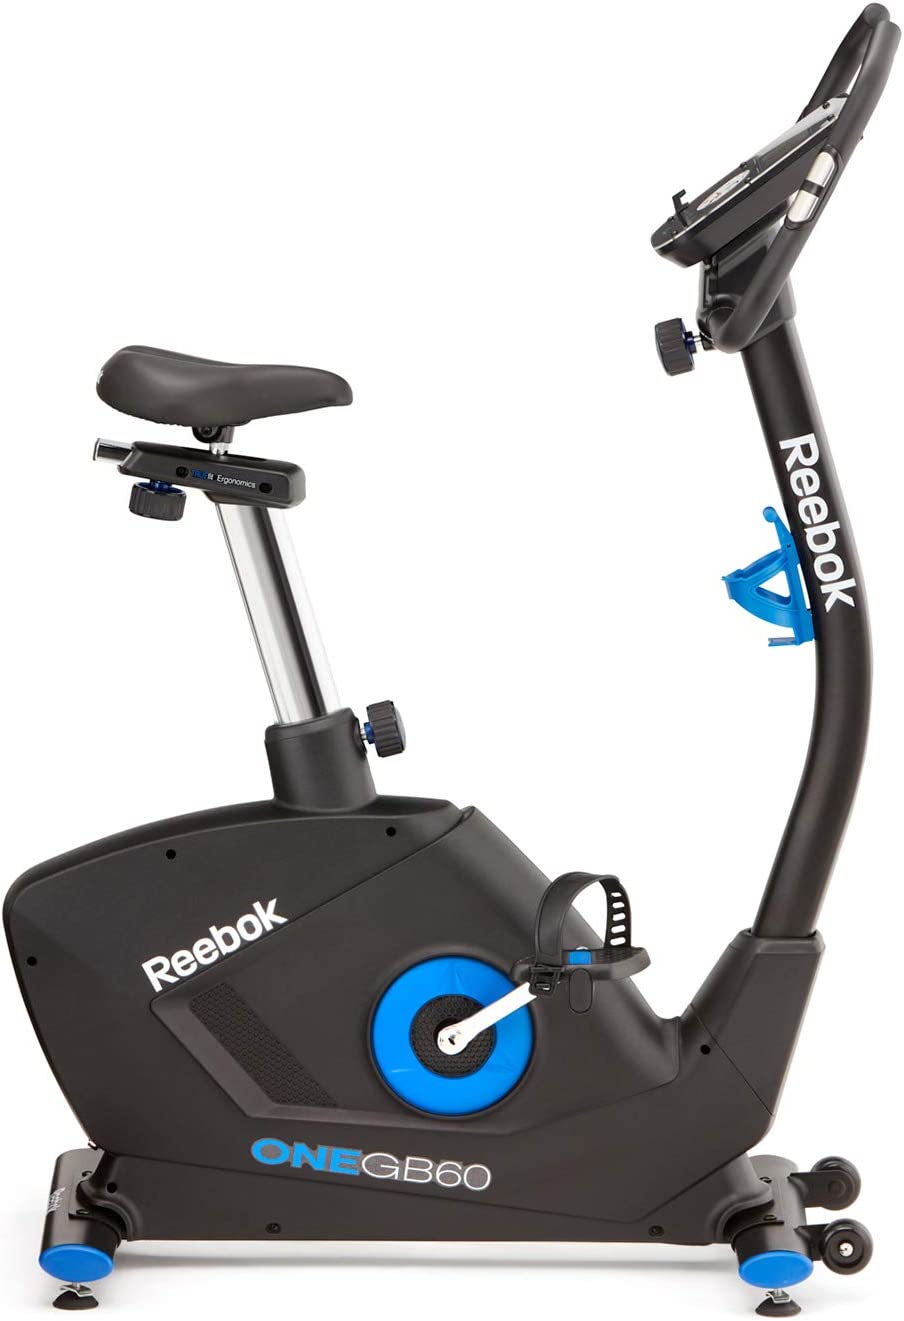 Reebok Exercise Bike GB60 - main image